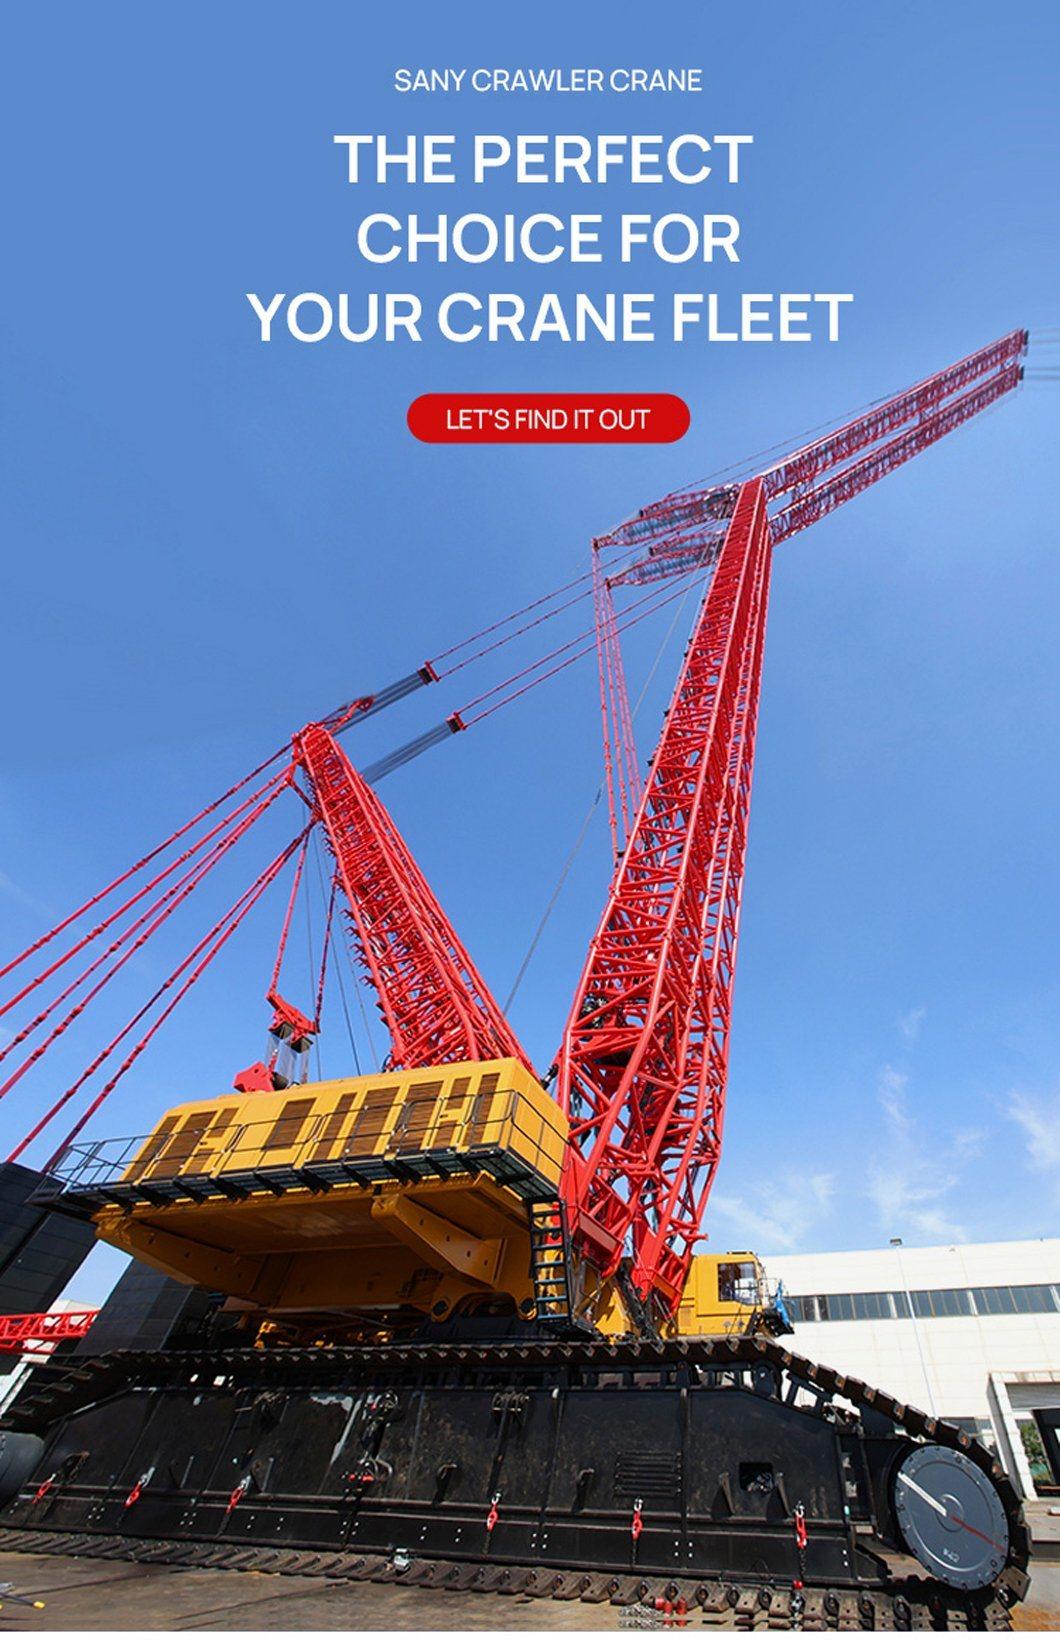 100 Tons Crawler Crane Sany Scc1000A Lifting Machine